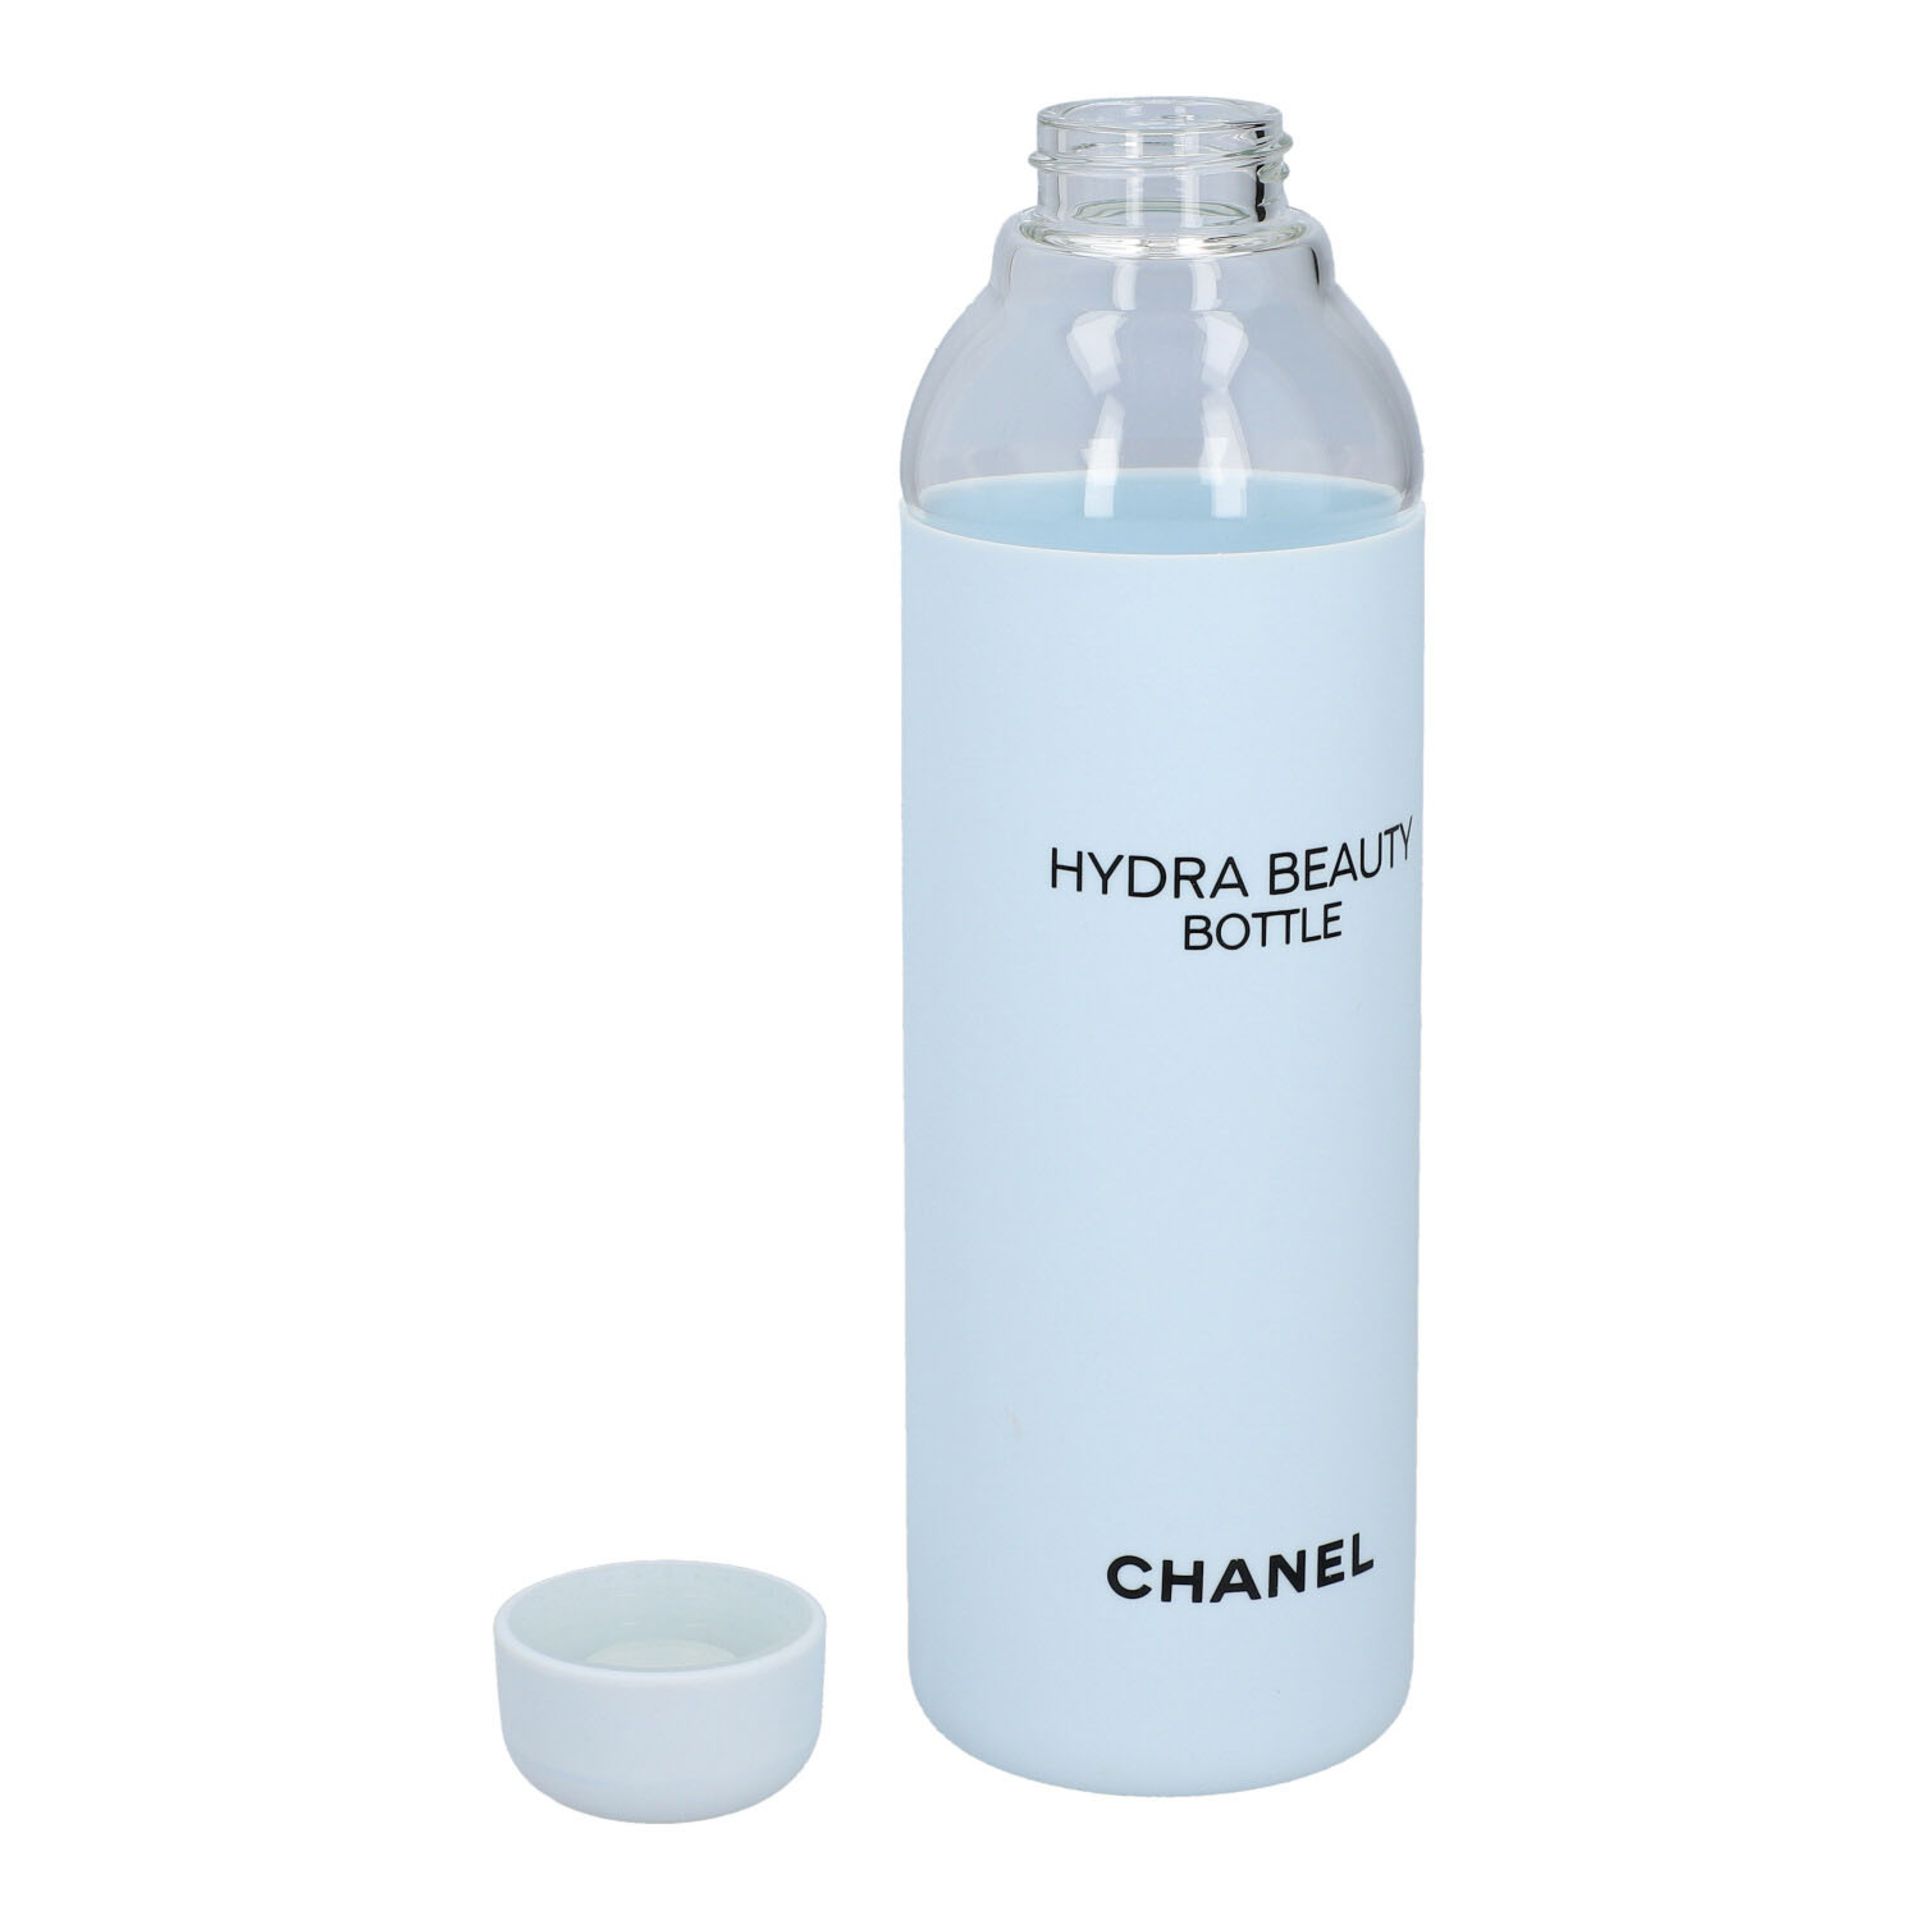 CHANEL Flasche "HYDRA BEAUTY BOTTLE". - Bild 4 aus 4